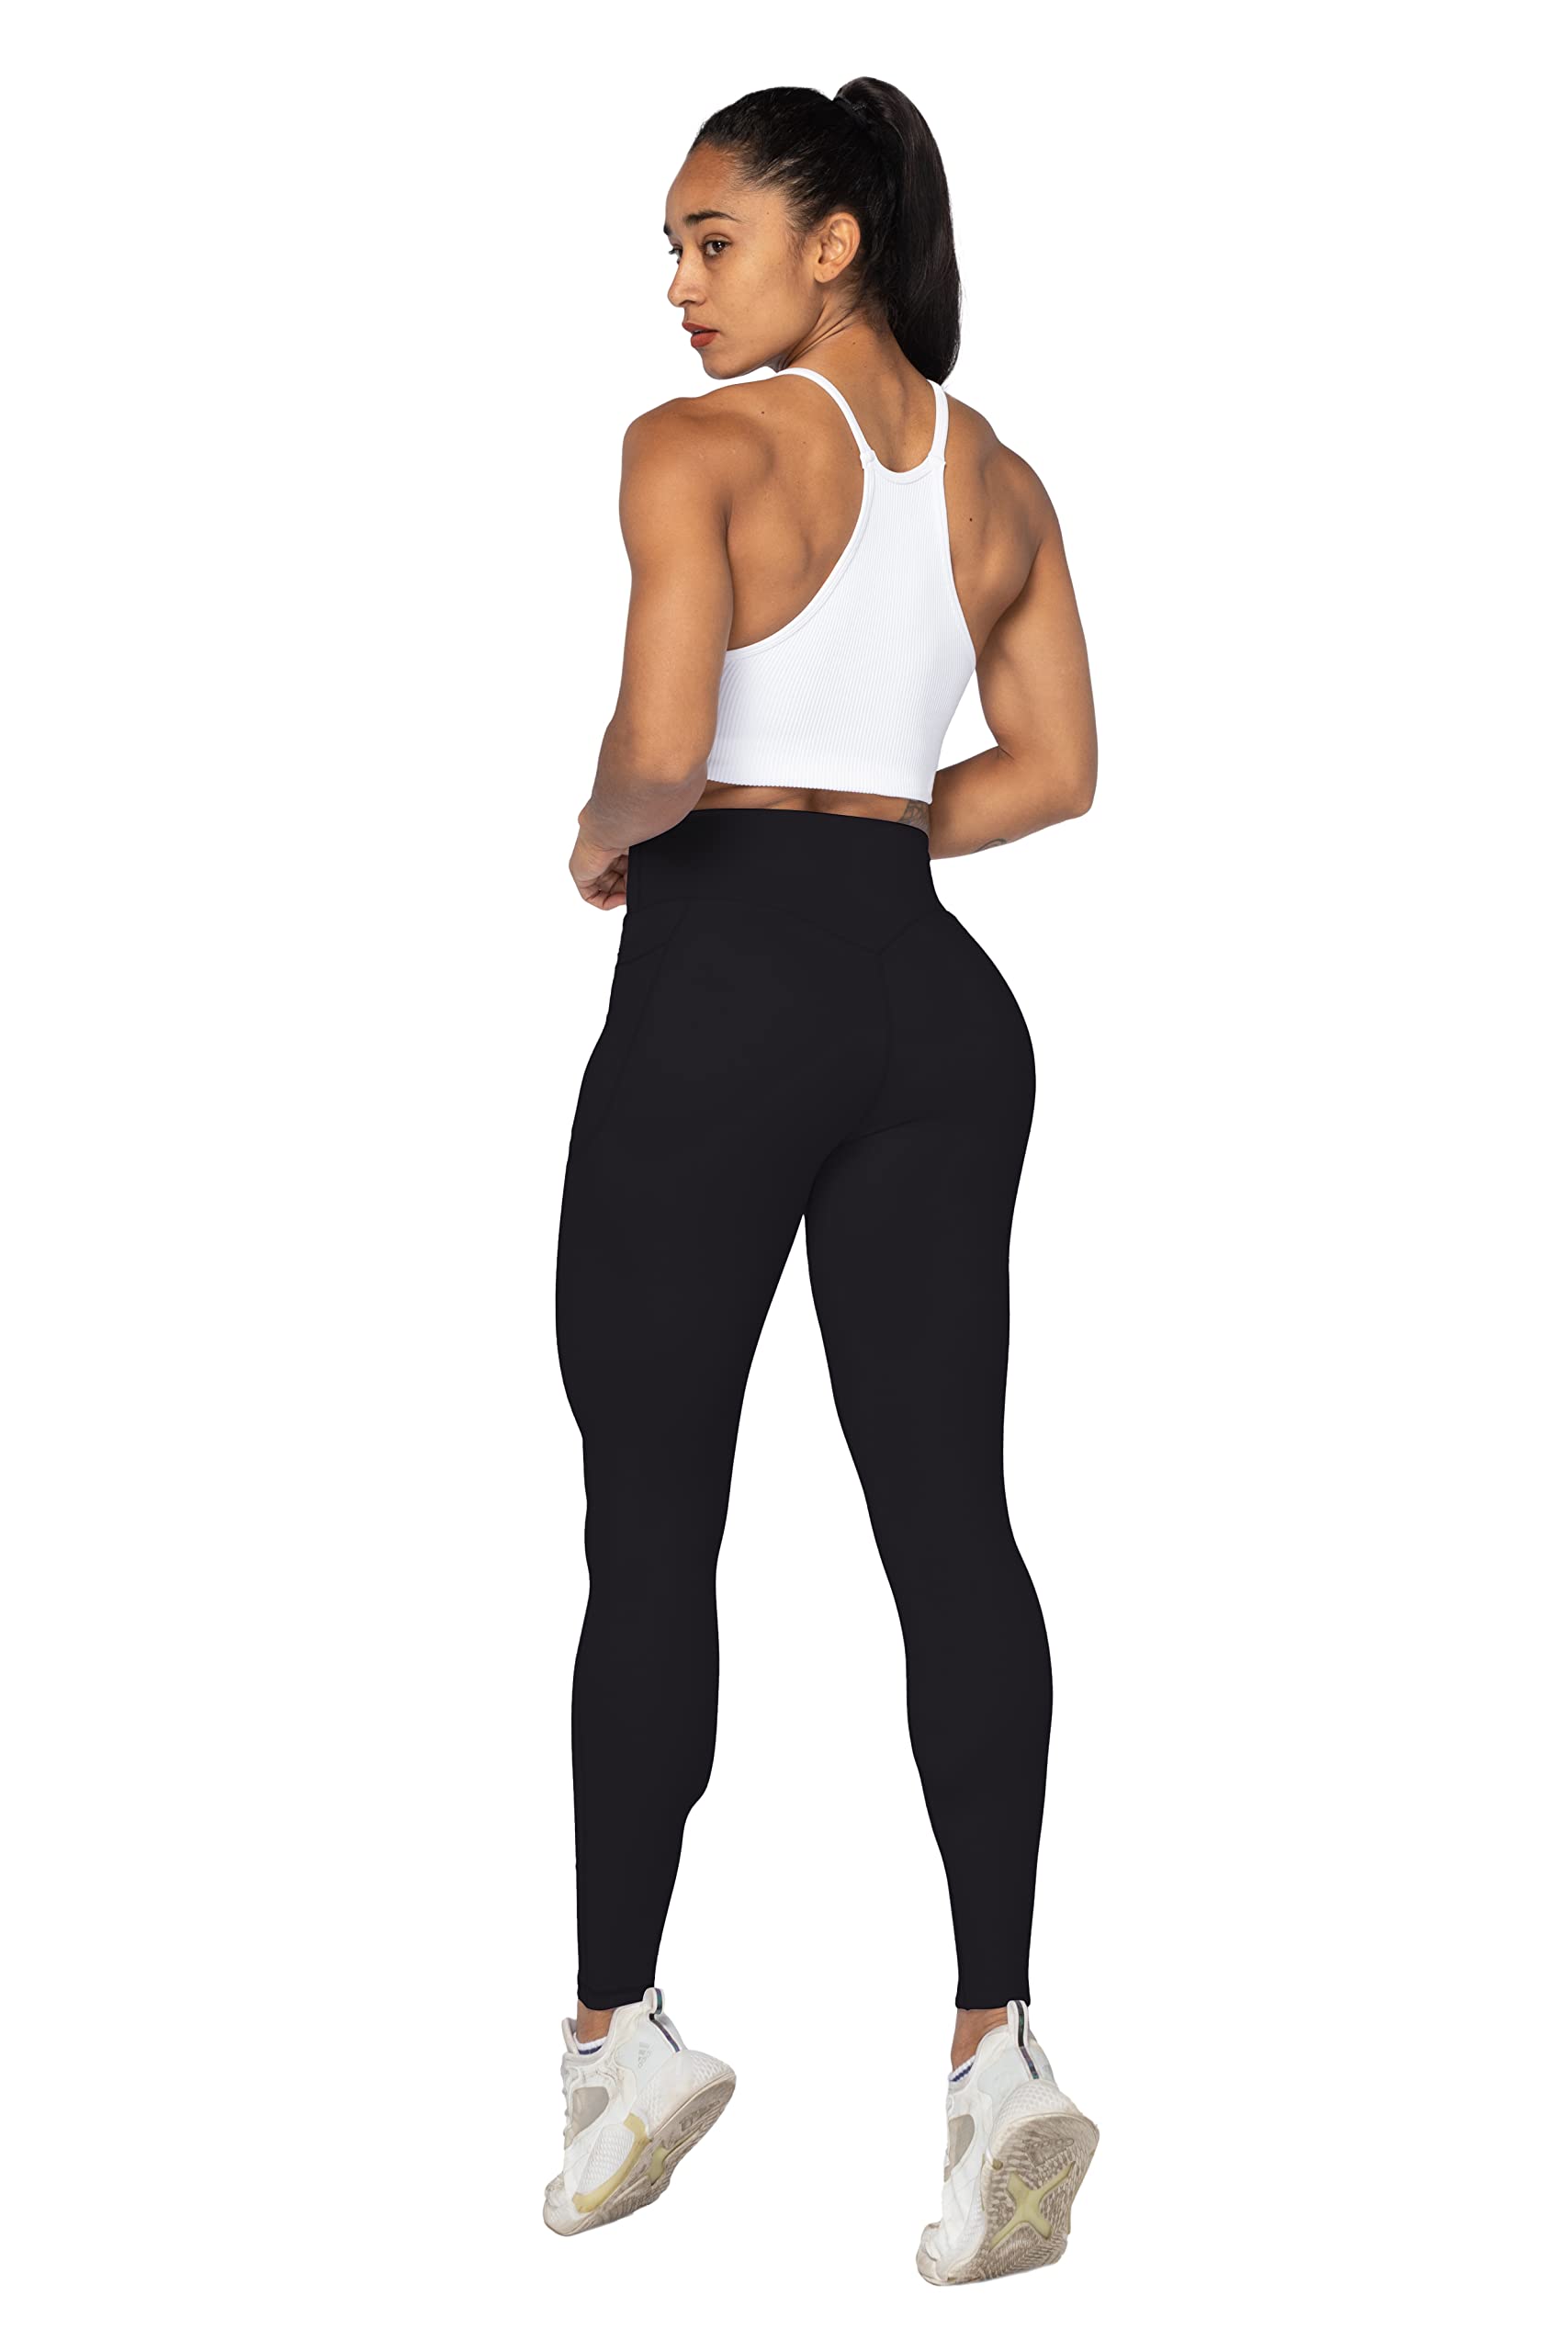 Sunzel Yoga Pants for Women with Pockets High Waist Workout